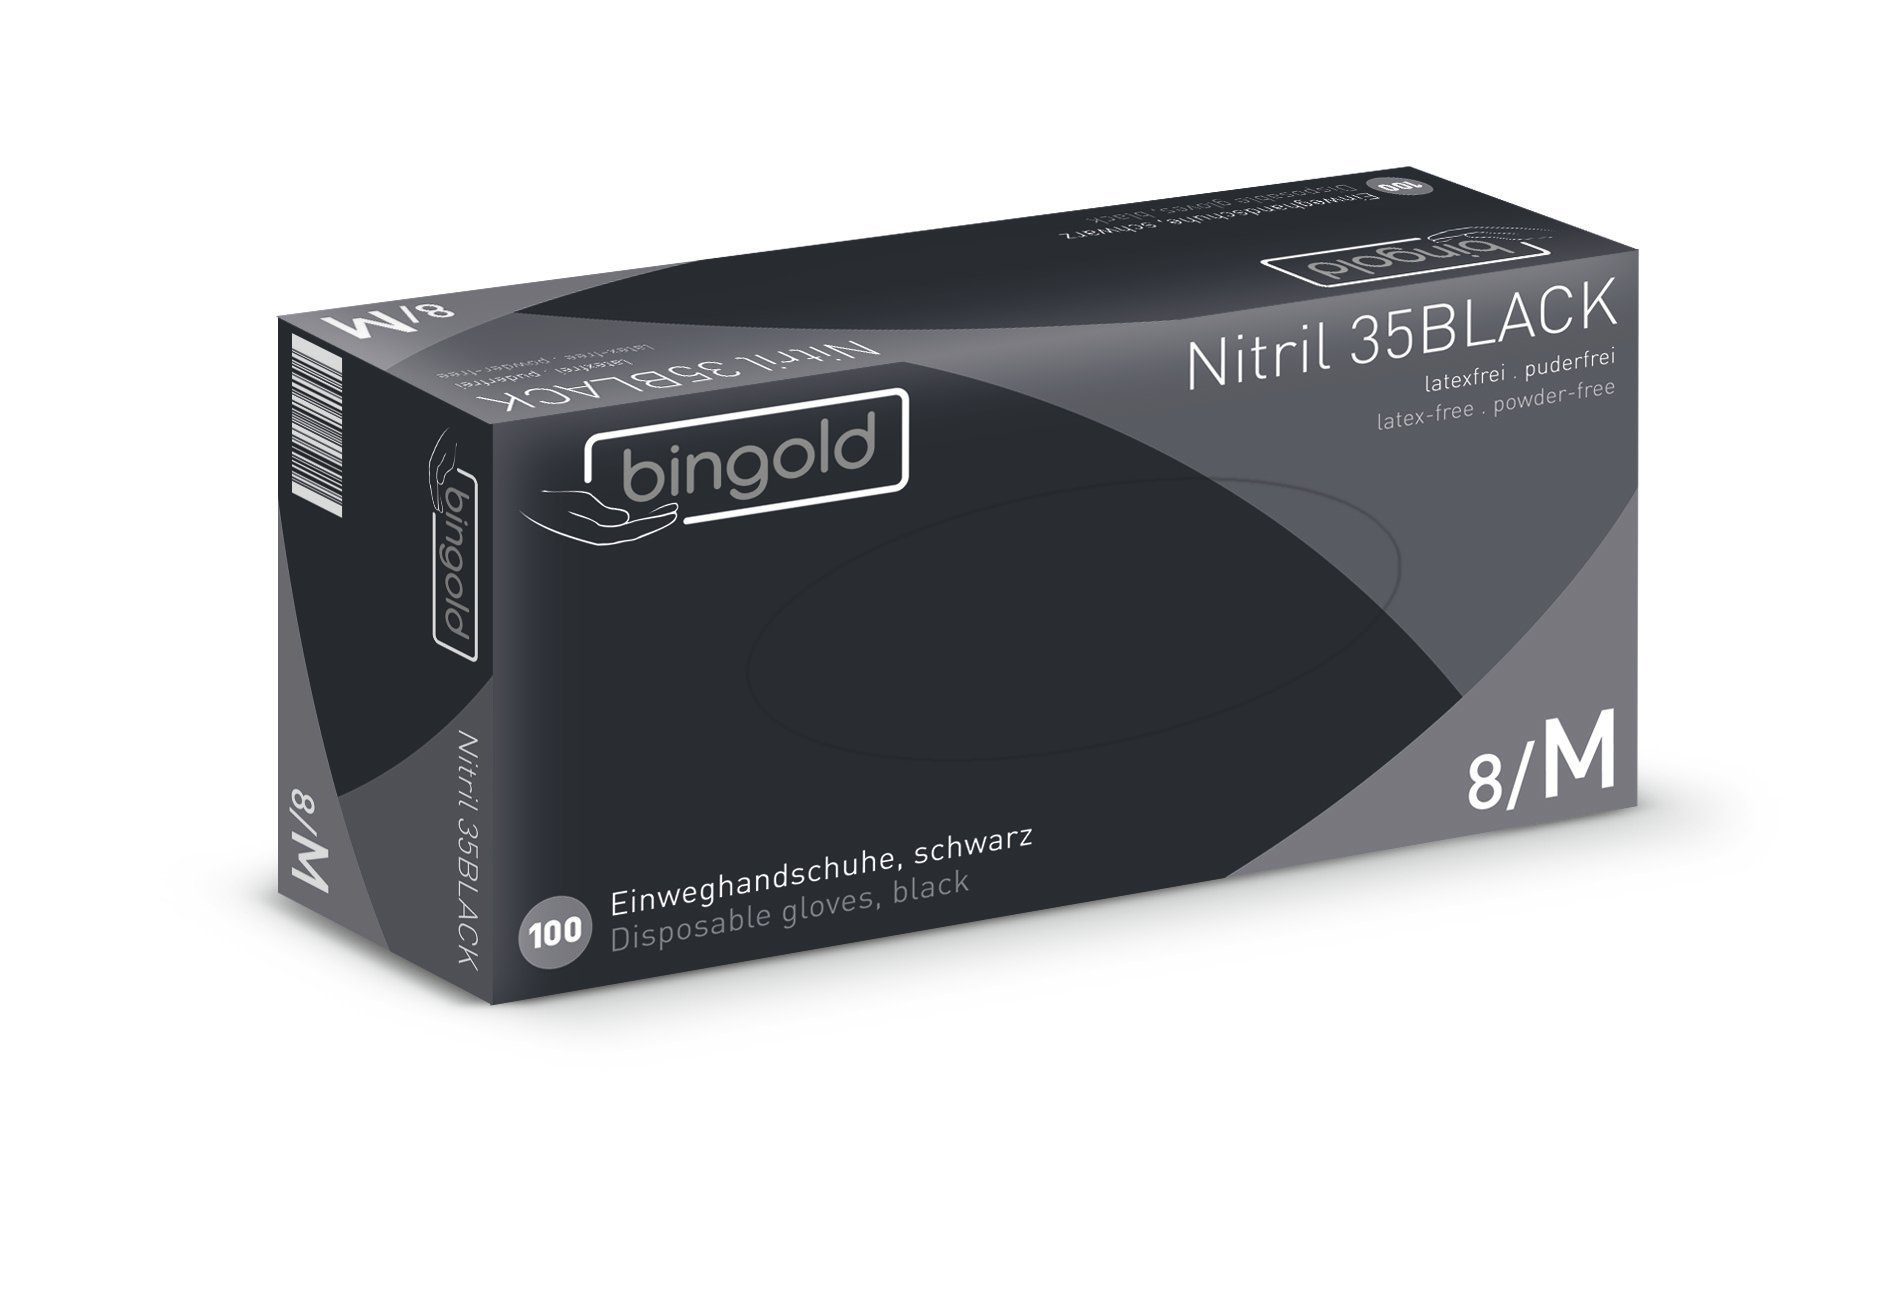 Bingold Nitril Einweghandschuhe Metamorph Einweghandschuhe 35Black - schwar -